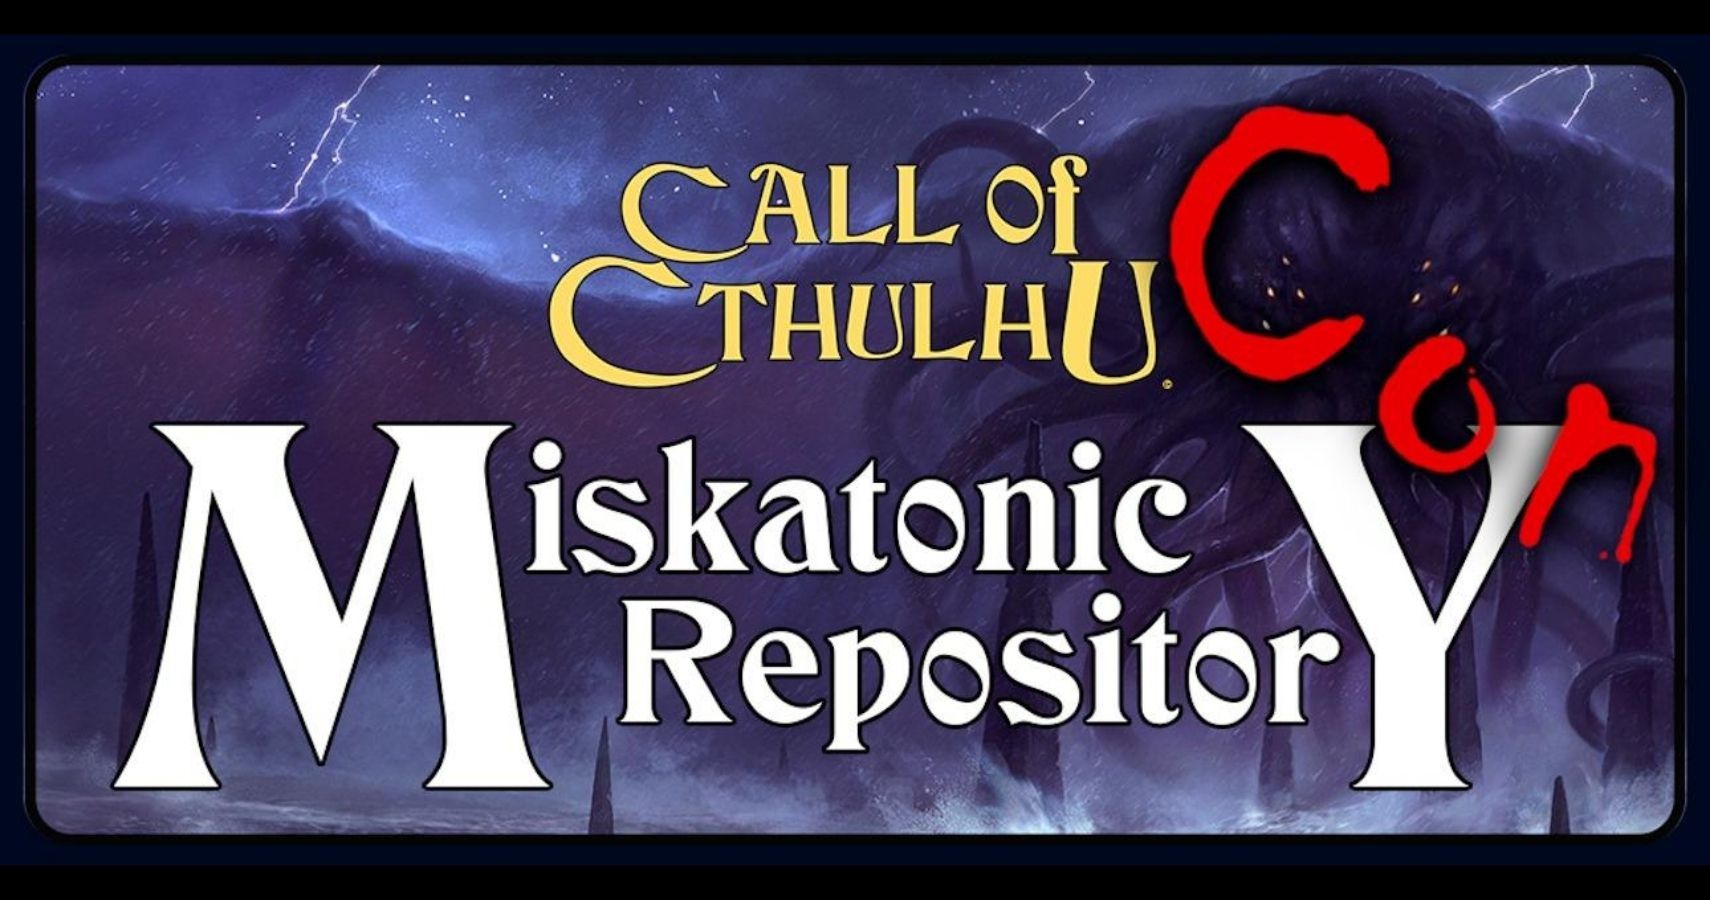 Chaosium Call of Cthulhu Miskatonic Repository Con feature image